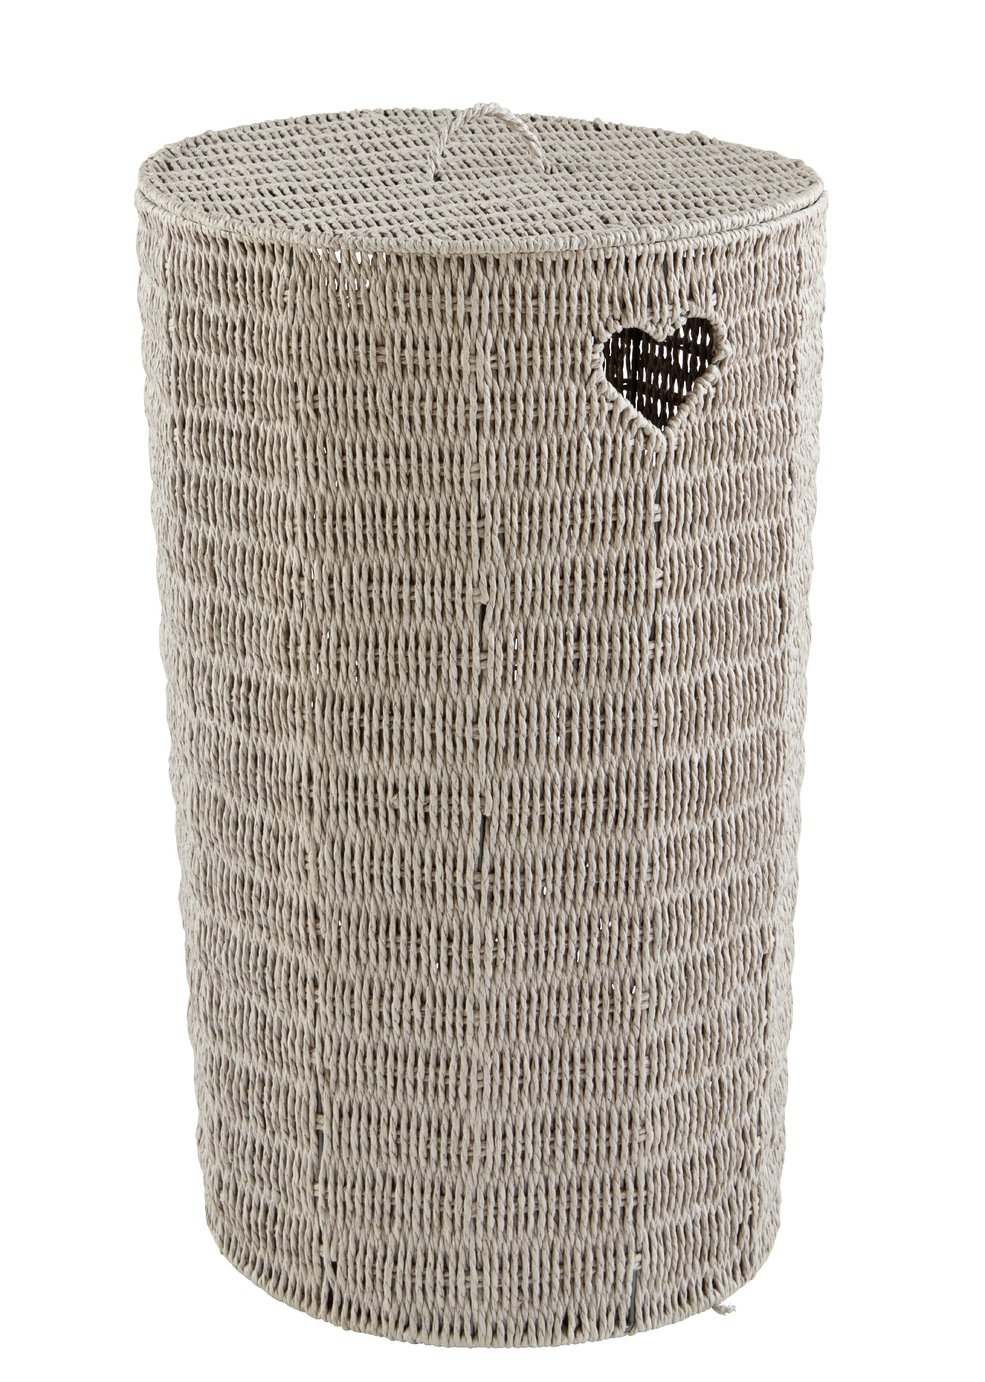 Argos Home Woven Hearts Laundry Basket